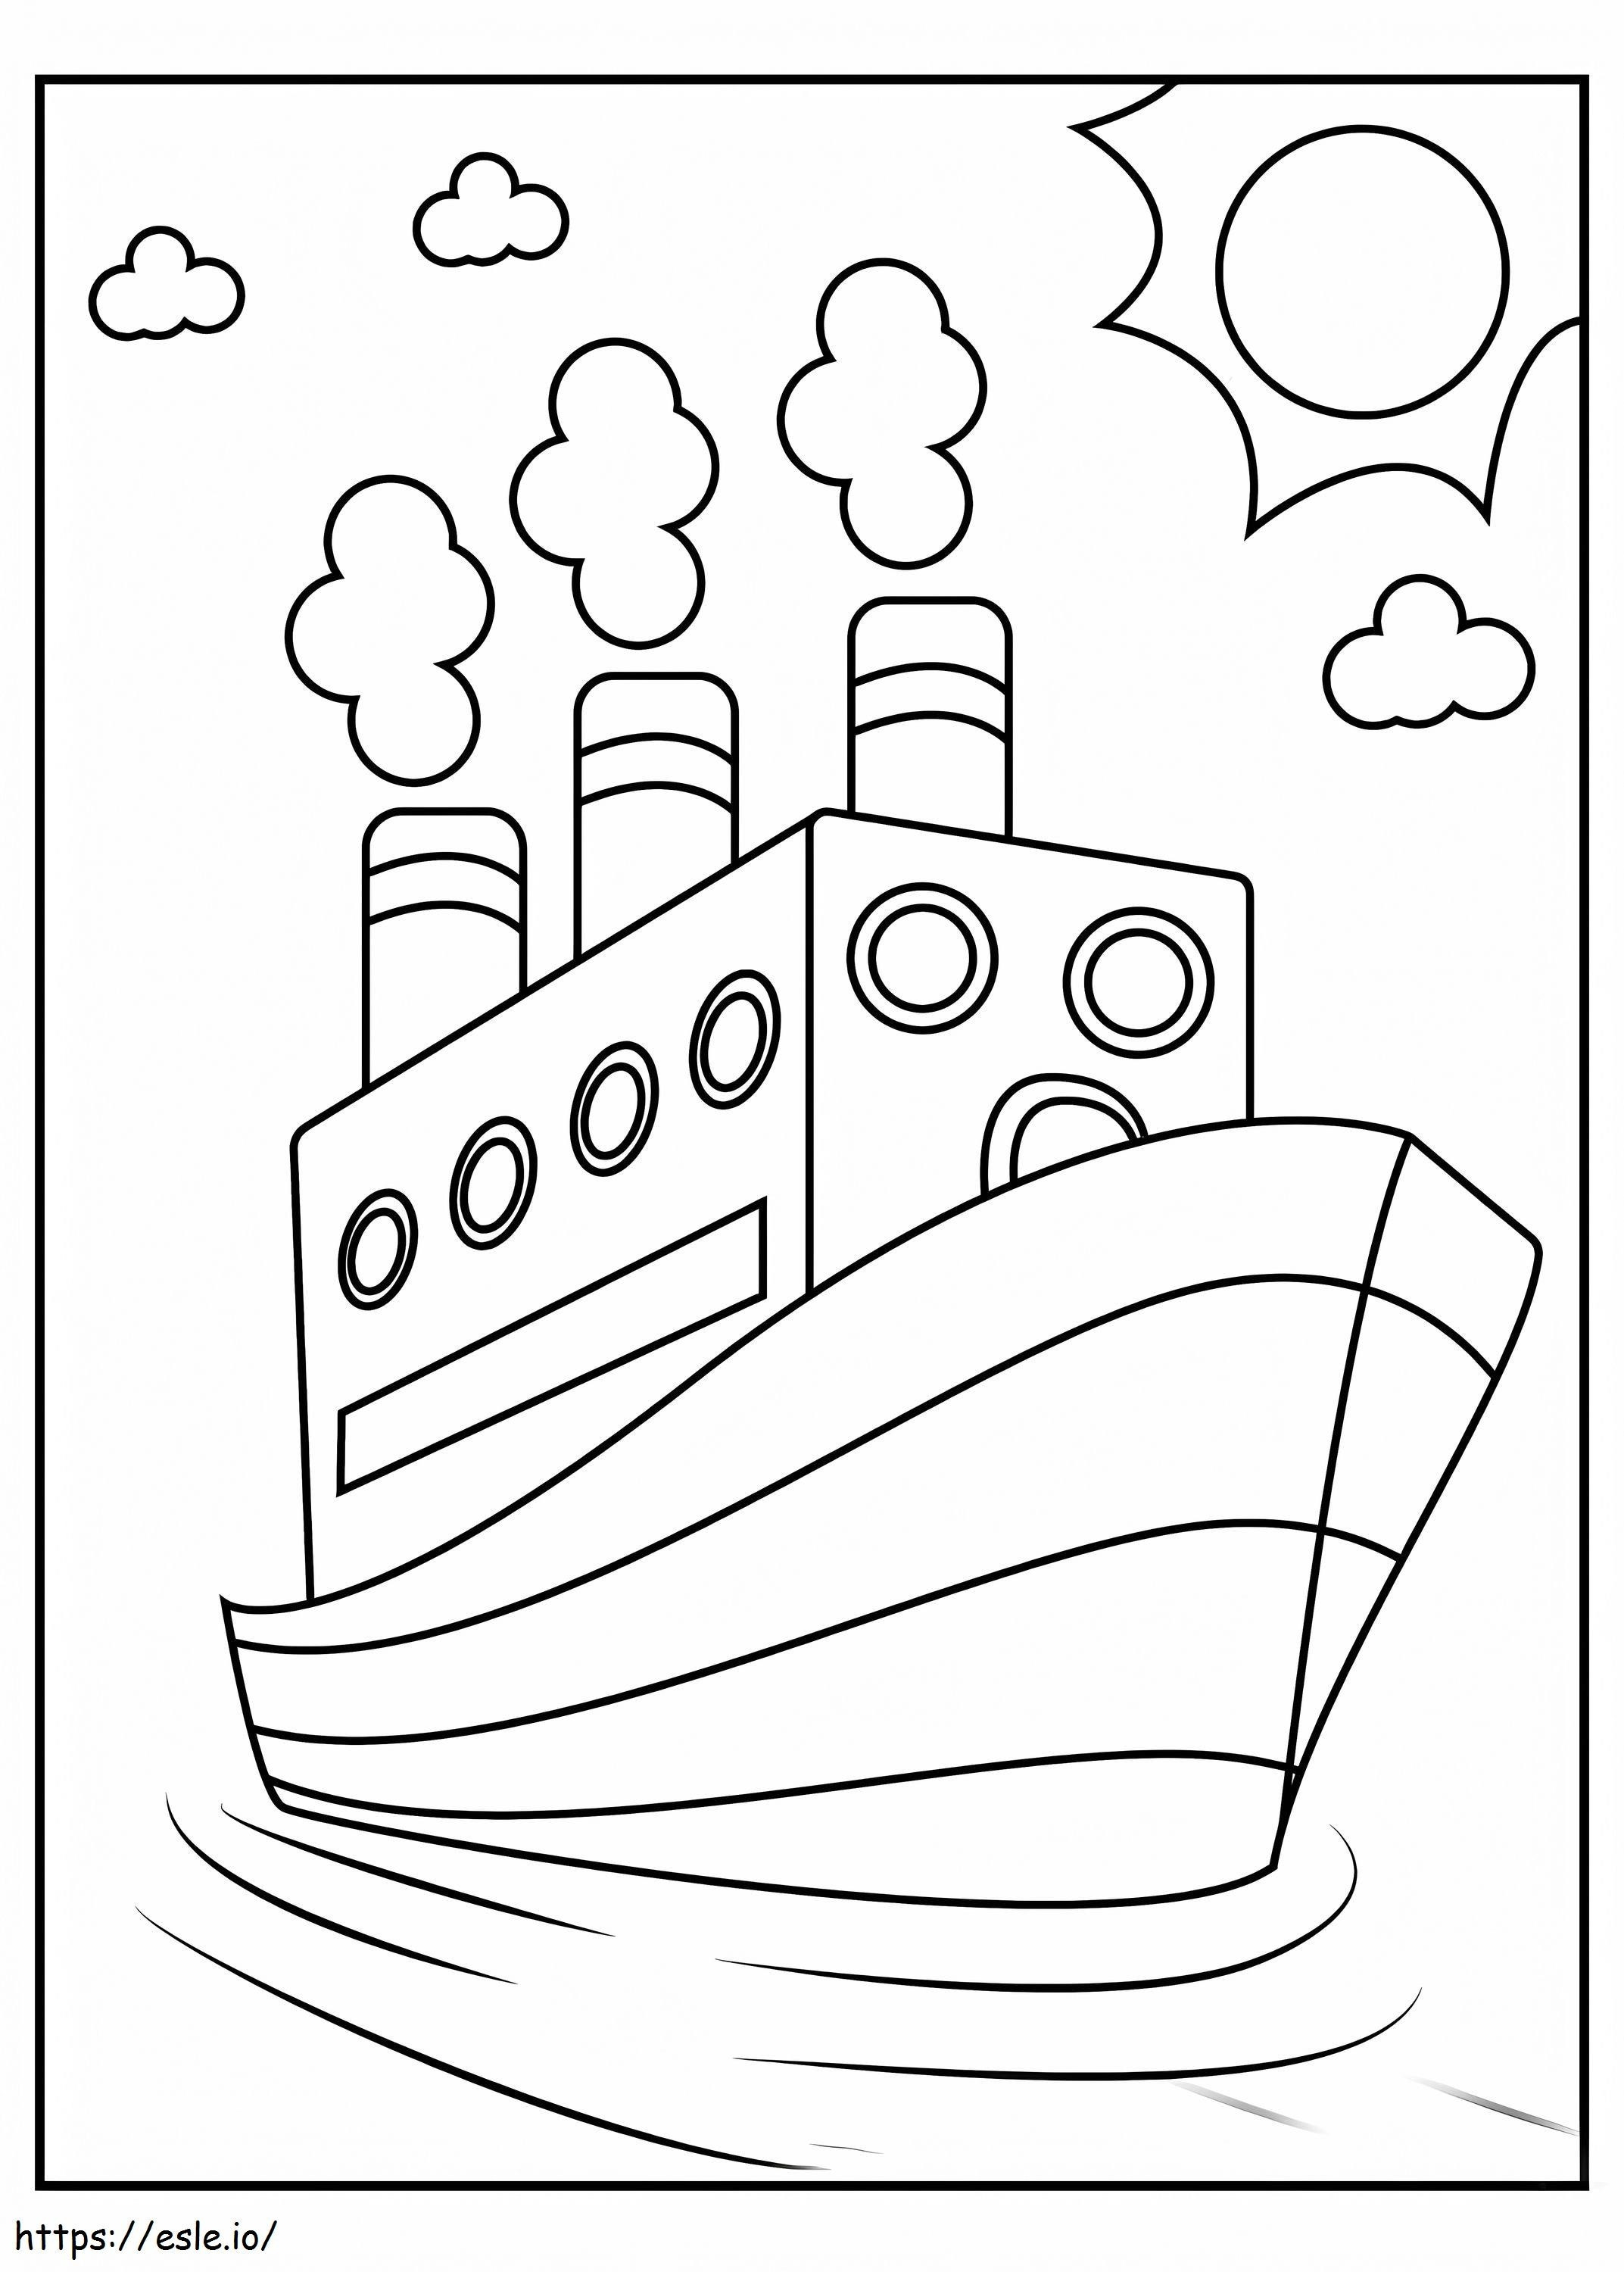 Barco Simples para colorir